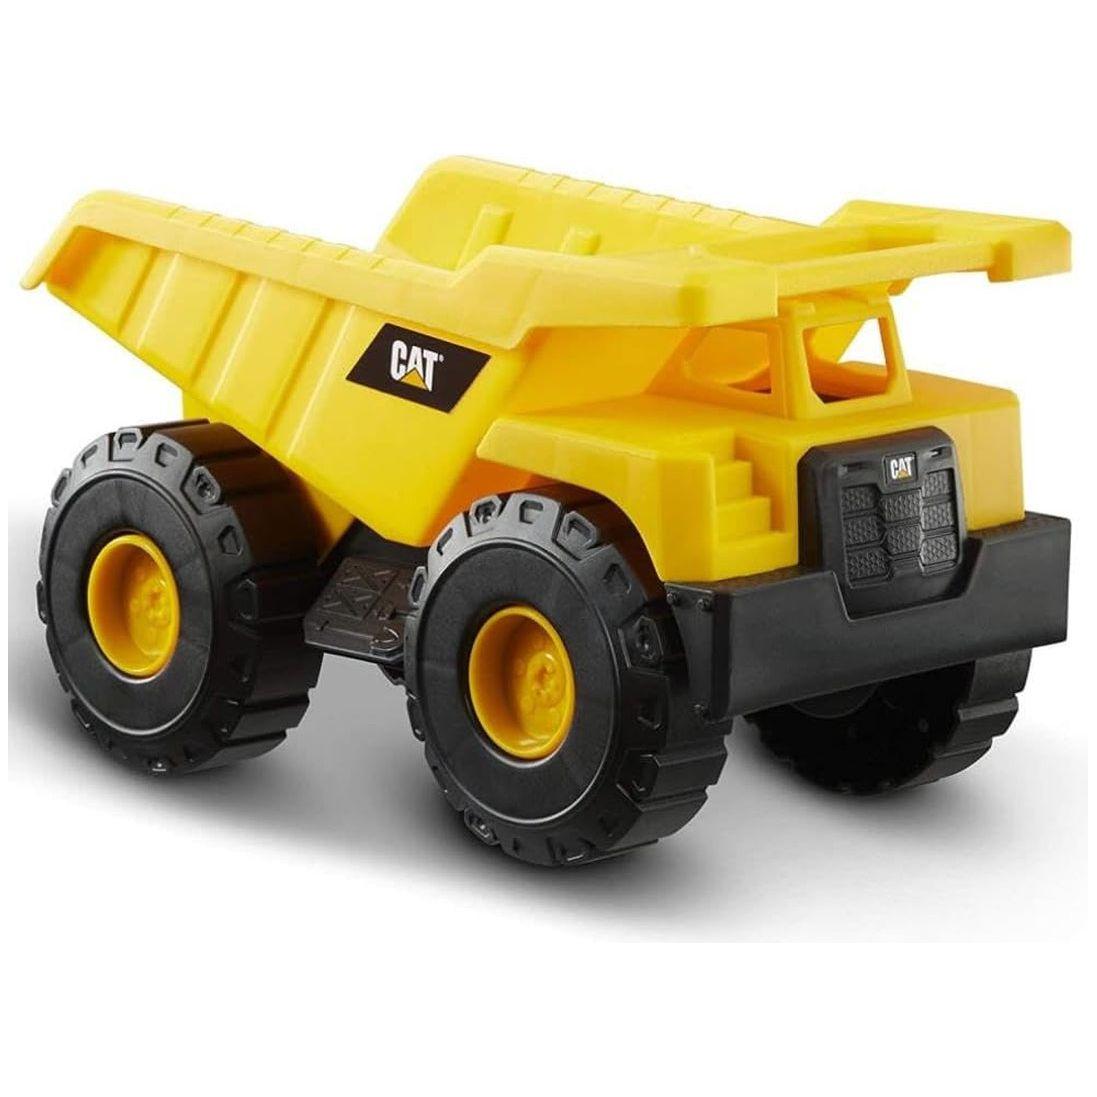 Dump Truck Toy Construction Vehicle